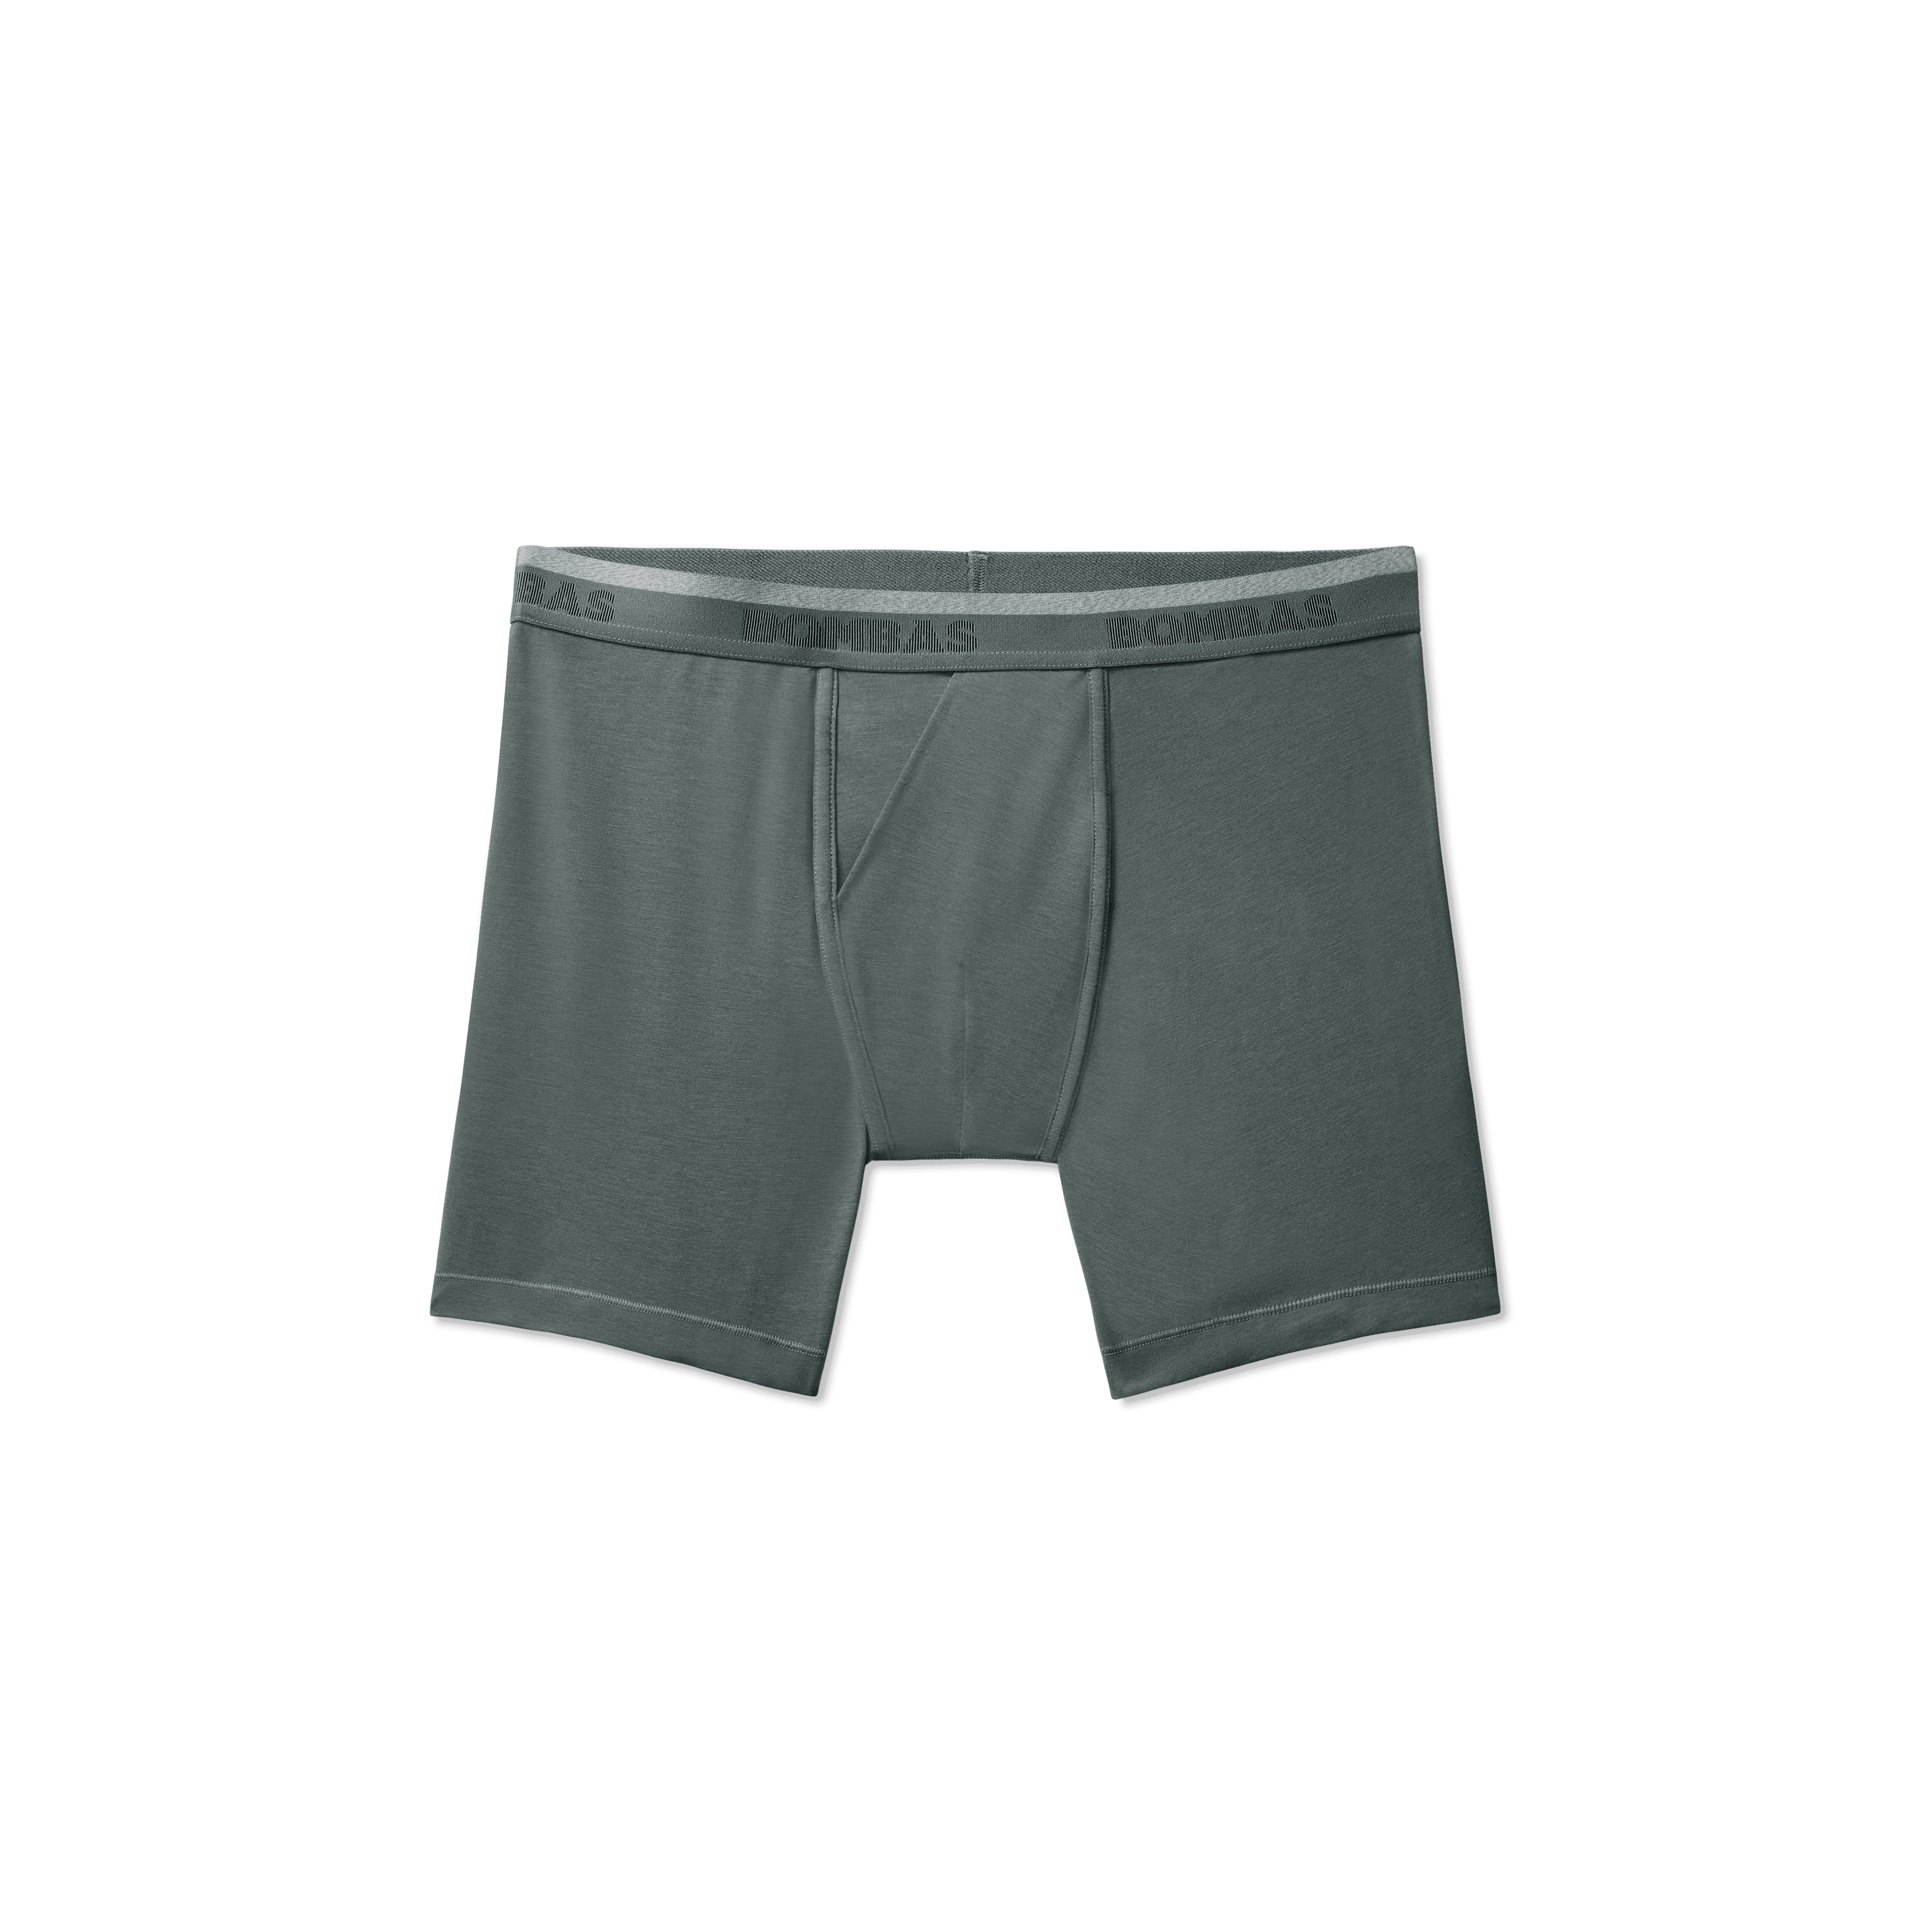 Black Soft Denim knit Men's boxer briefs with pockets